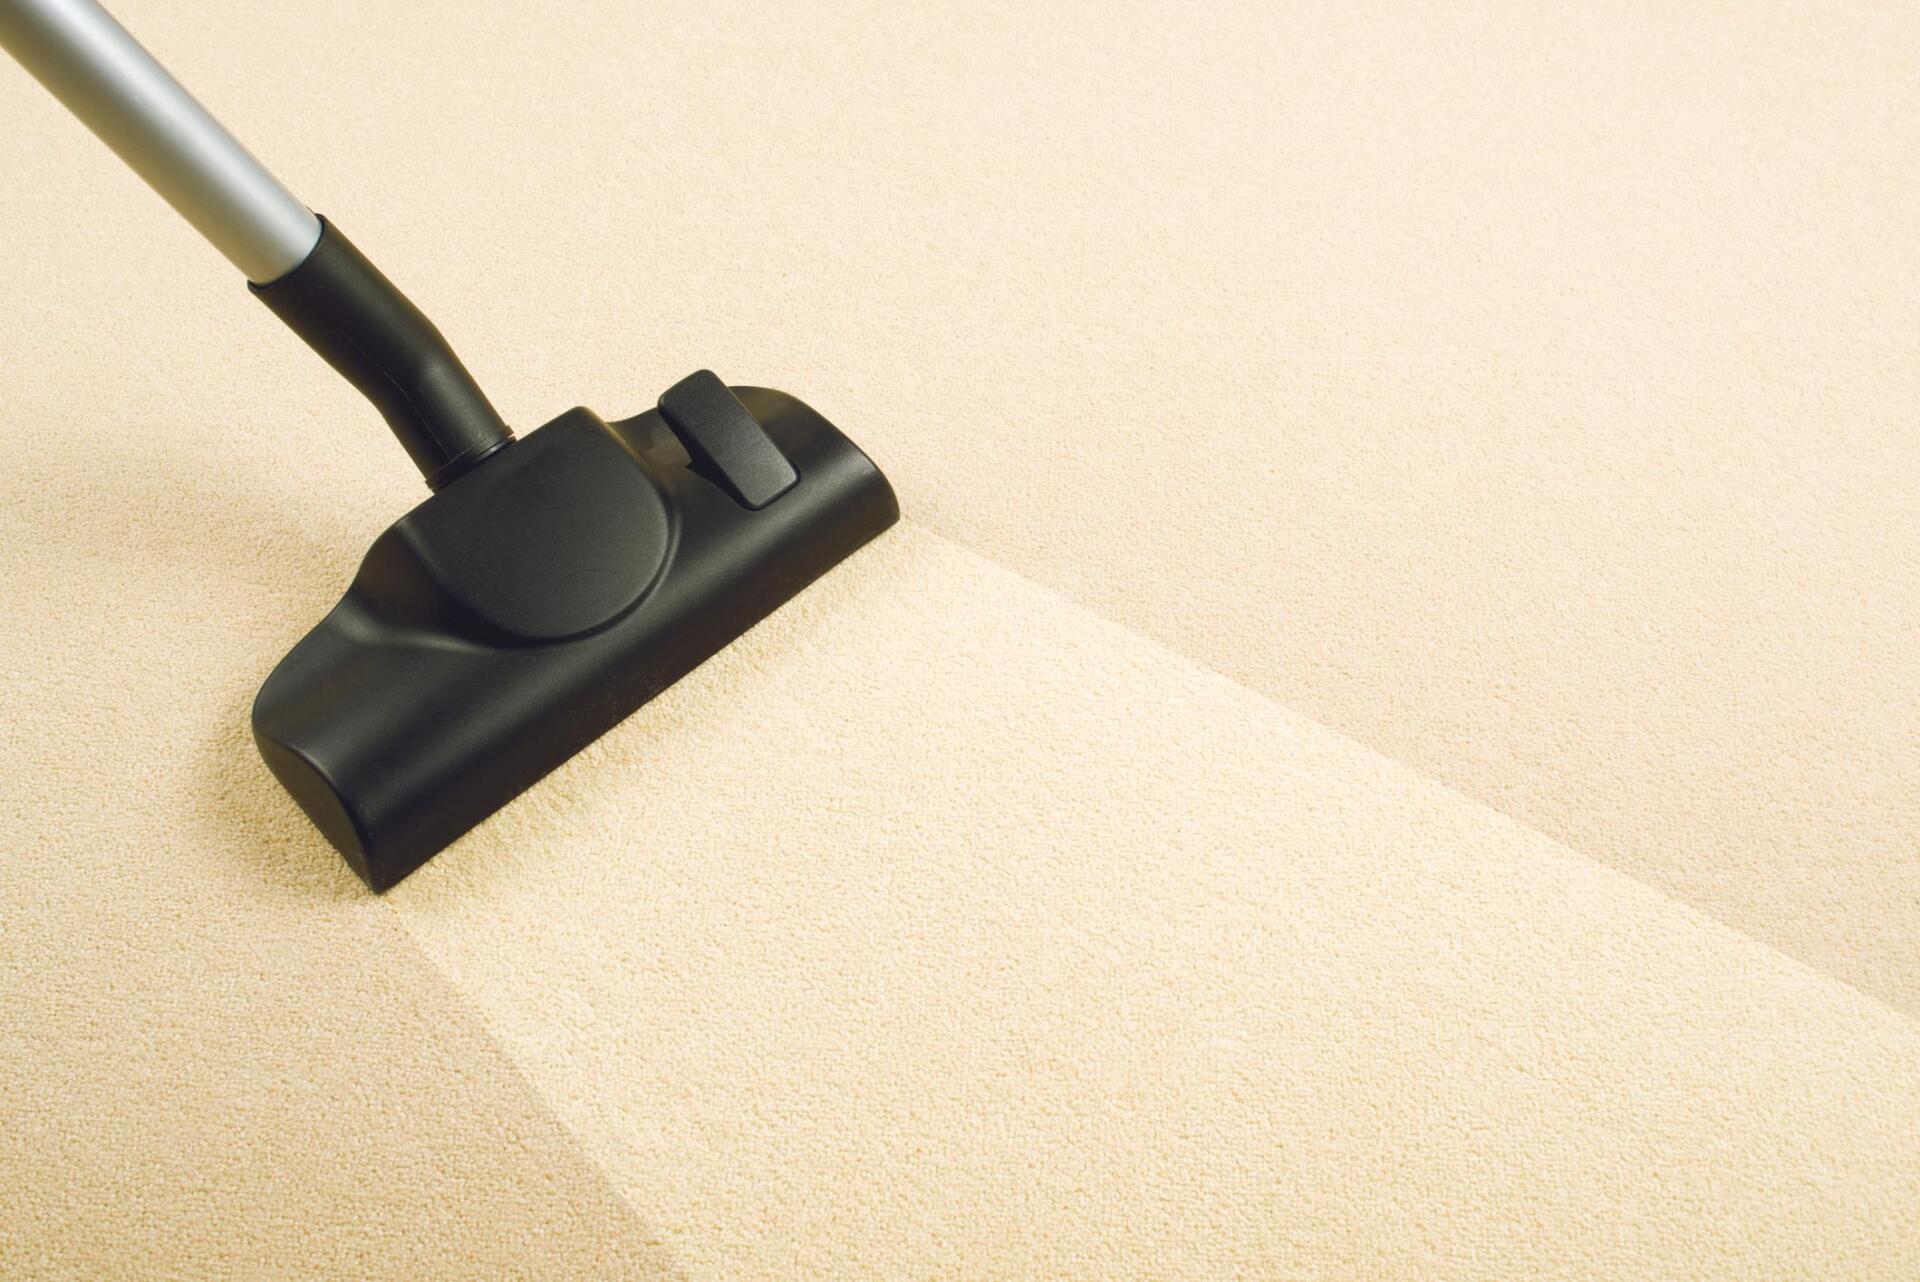 a line of clean carpet